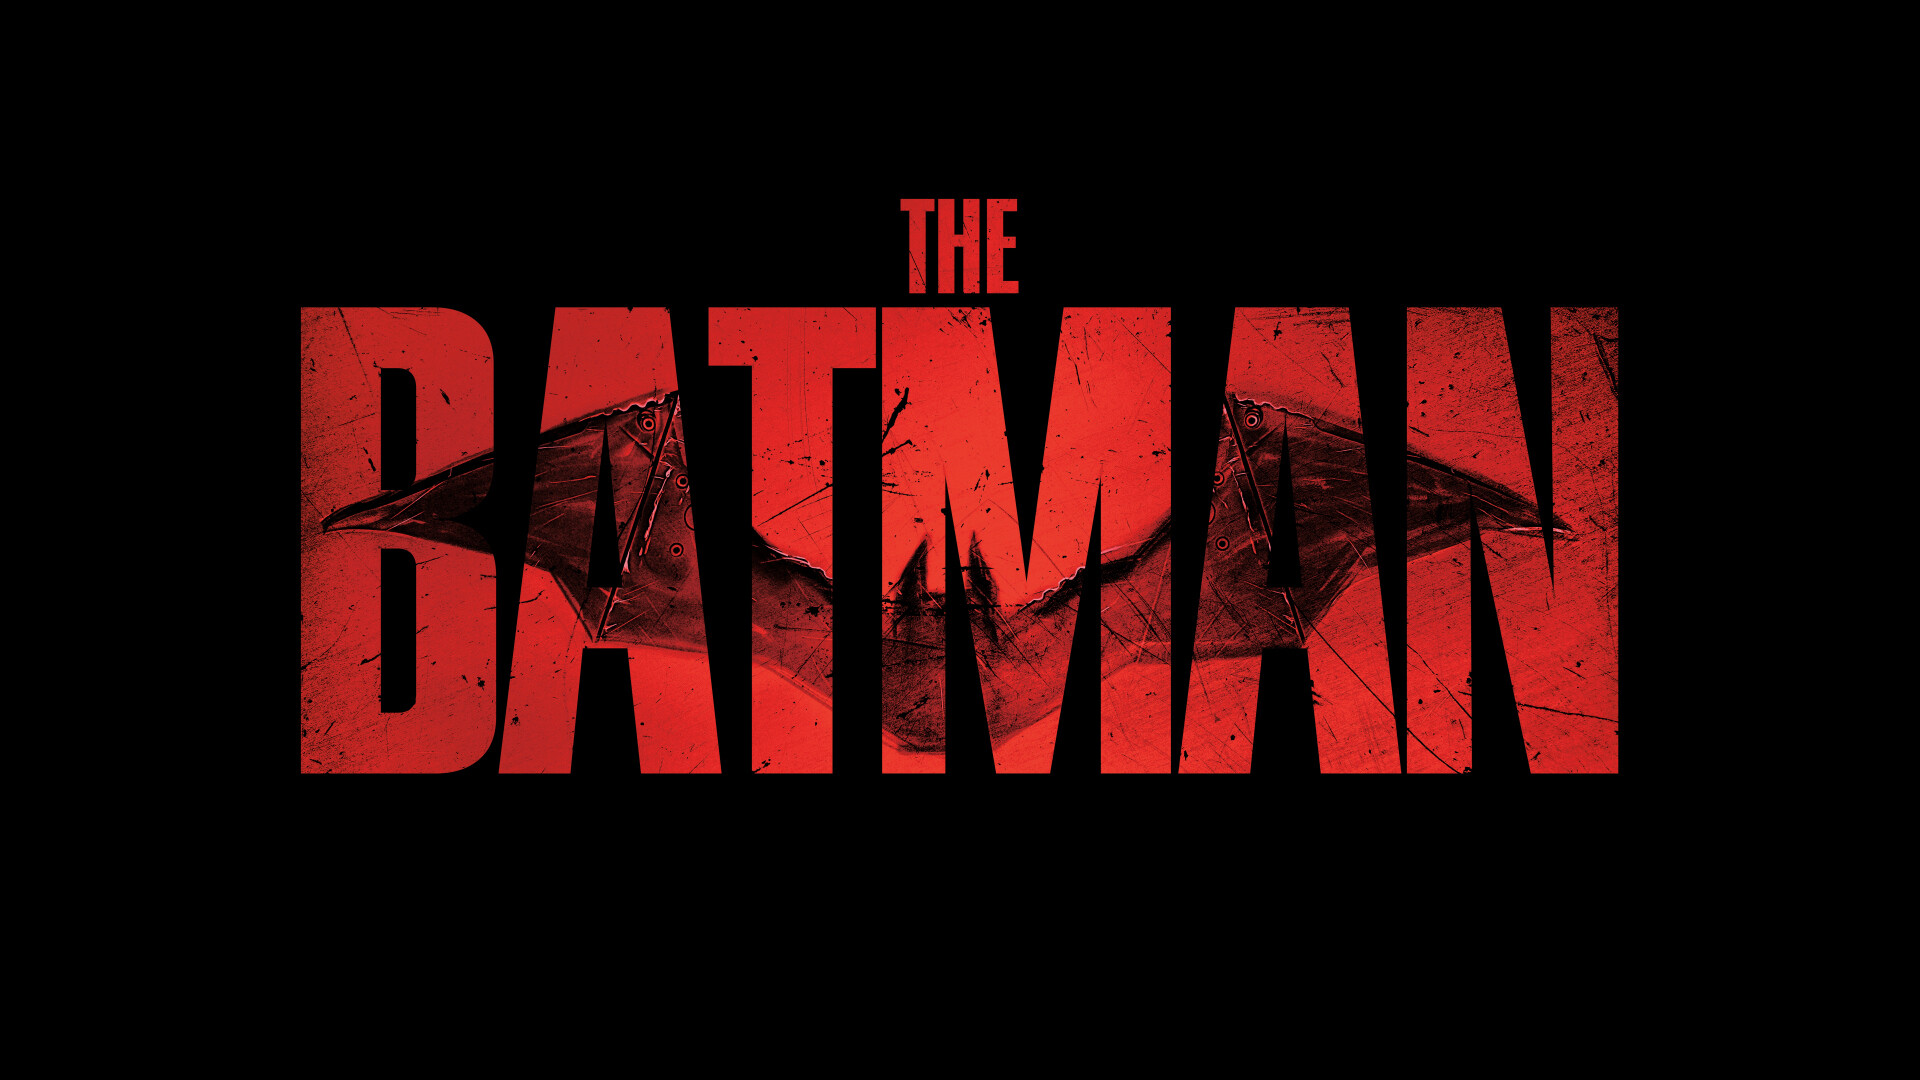 The Batman (2022): The film stars Robert Pattinson as Bruce Wayne, Zoe Kravitz as Catwoman, Paul Dano as Riddler. 1920x1080 Full HD Background.